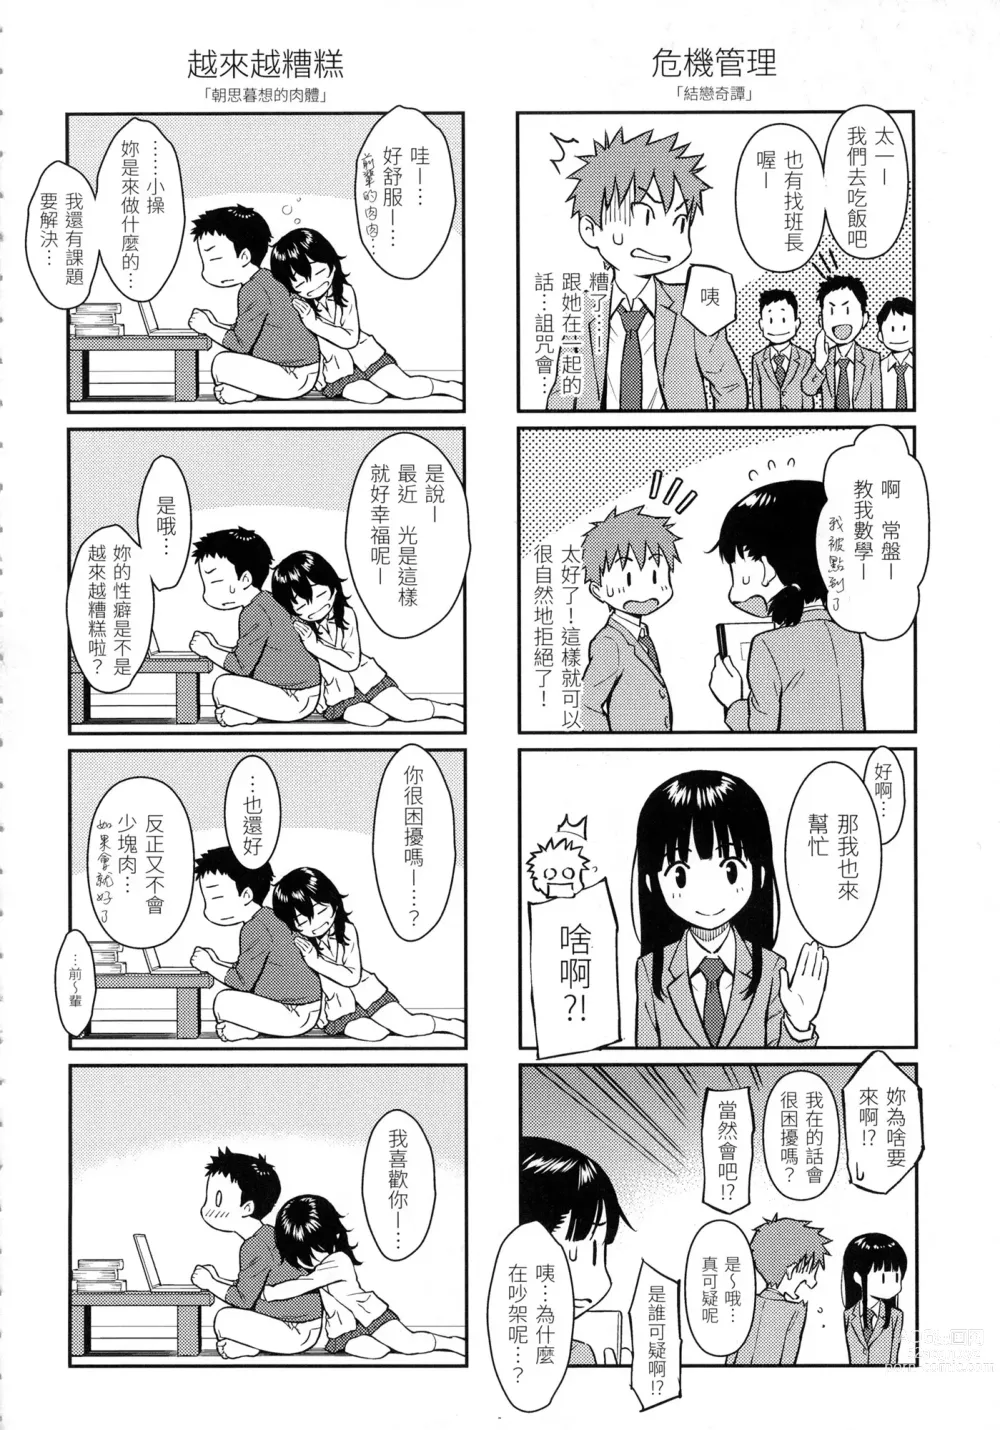 Page 217 of manga 求愛異鄉人 (decensored)